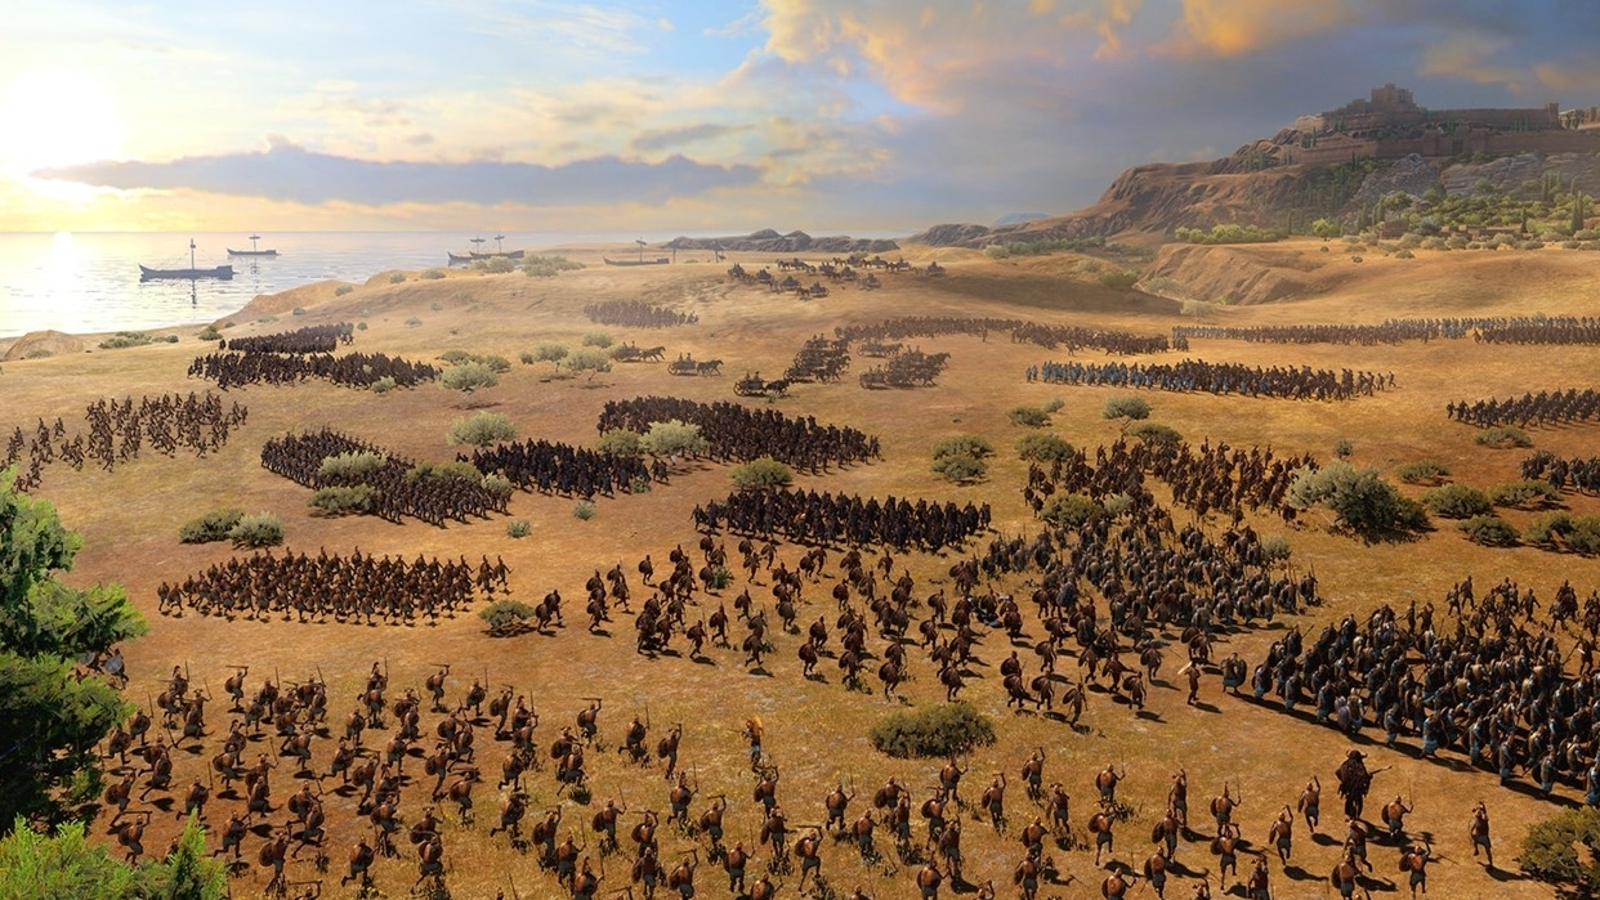 Troy - Total War